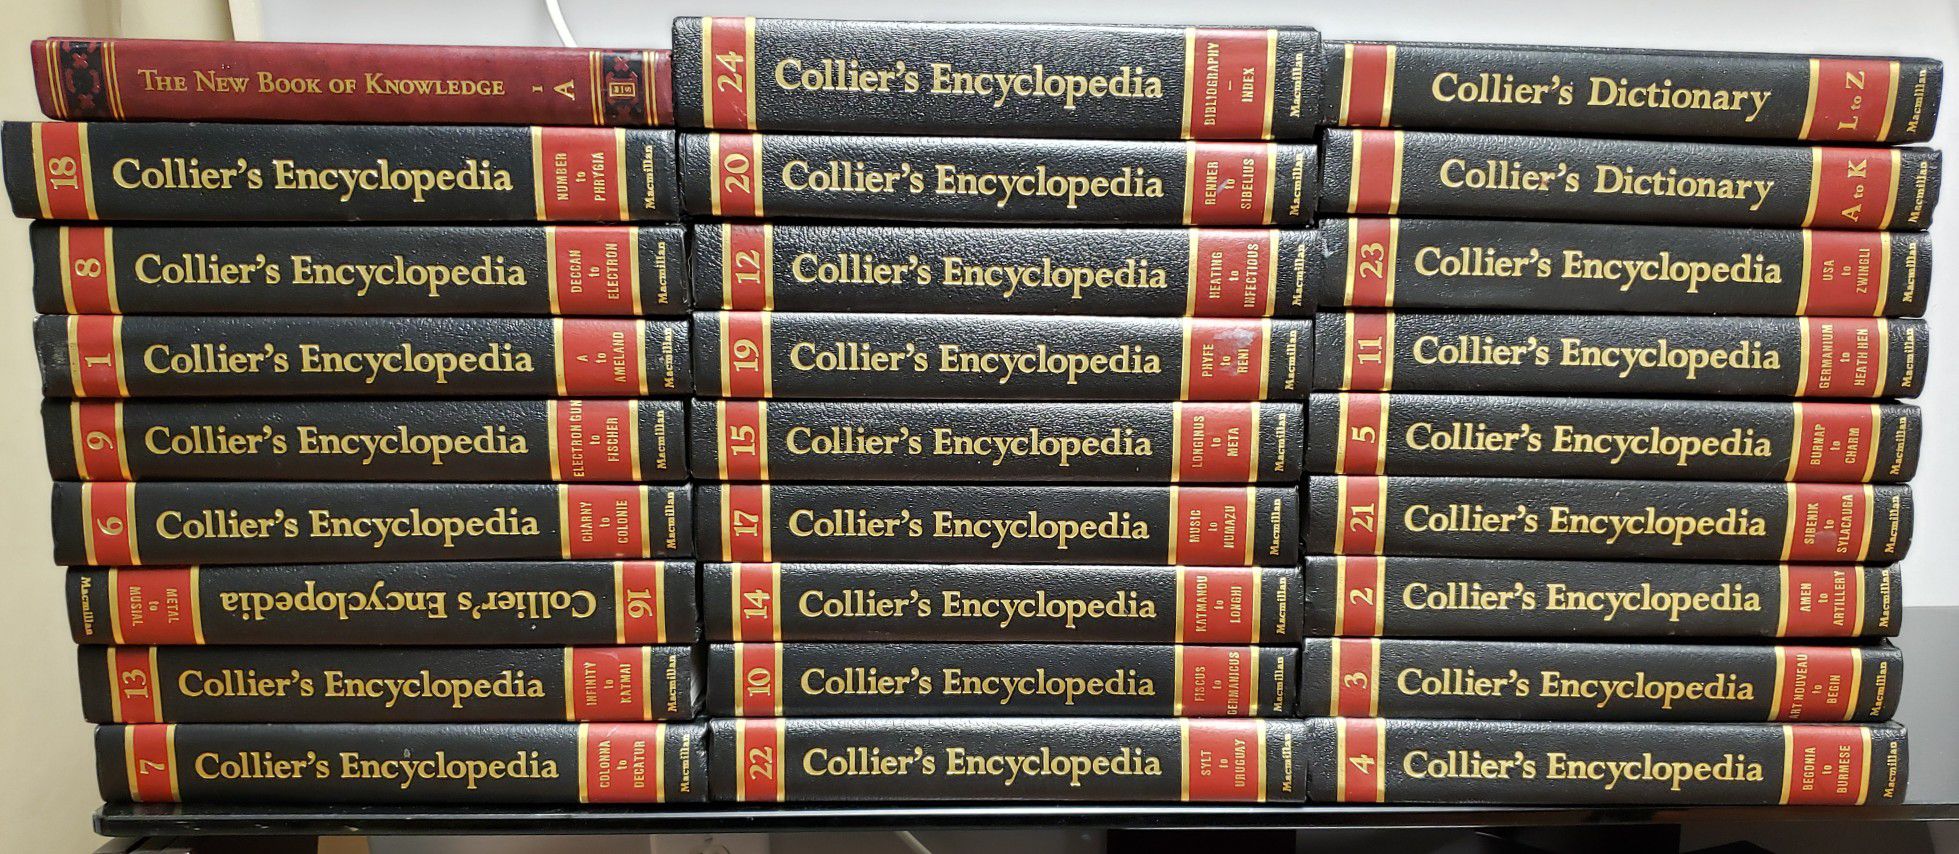 FREE Encyclopedia books